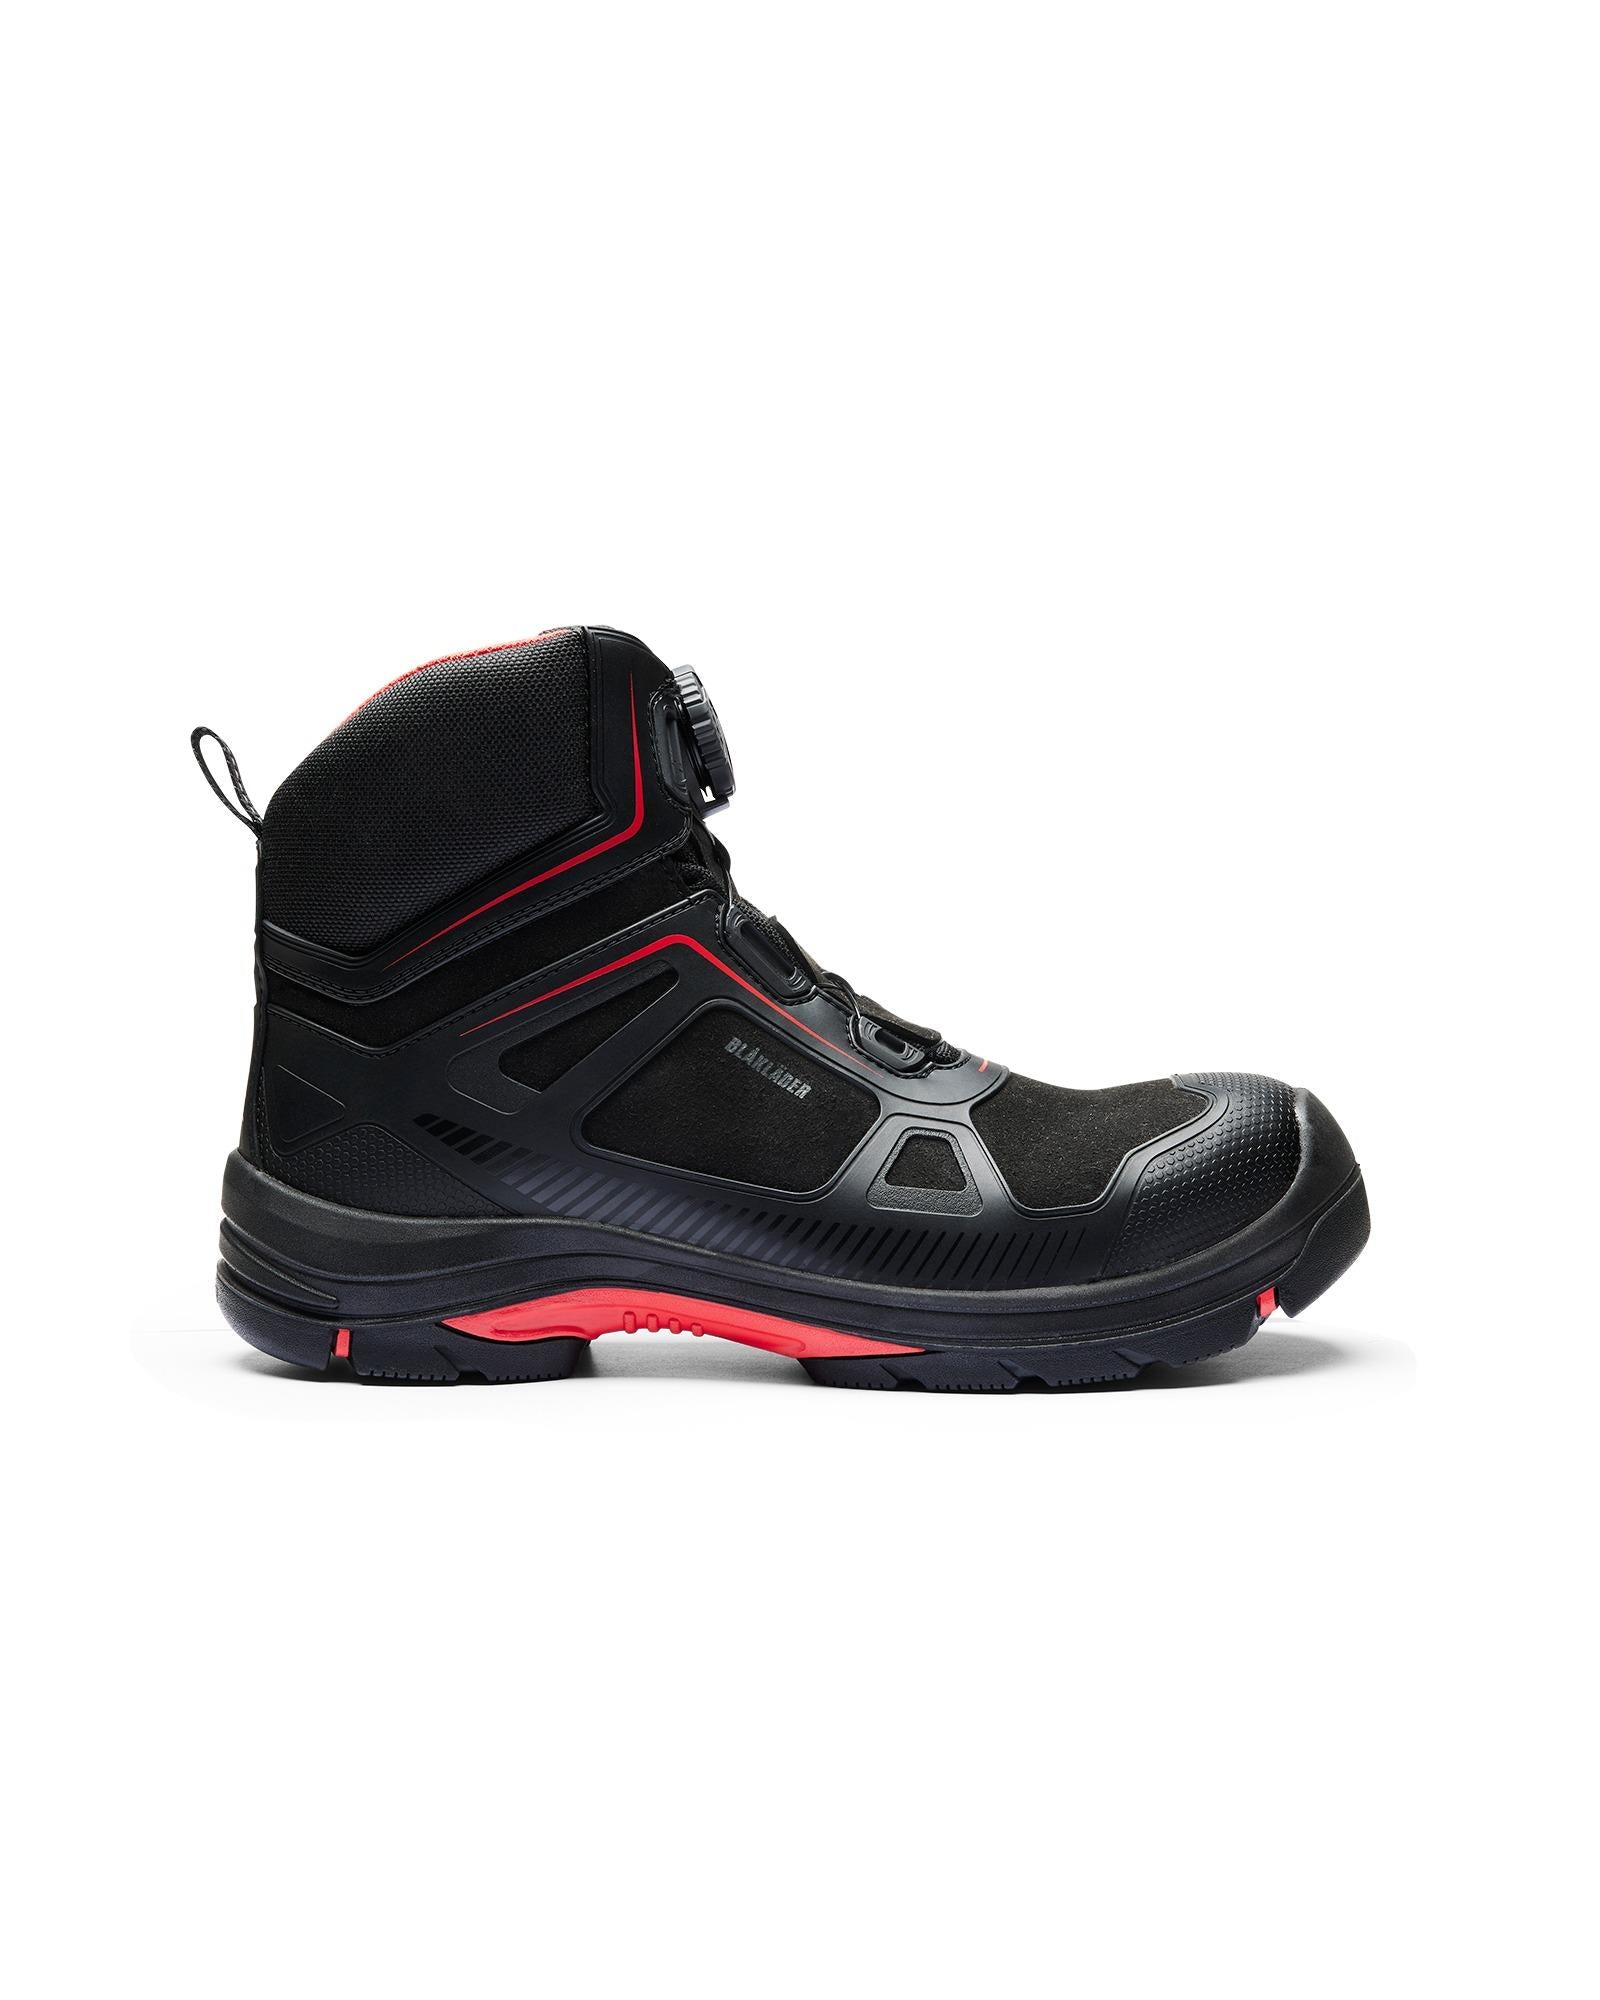 Blaklader Gecko black/red microfibre composite toe/midsole wide safety work boot #2473